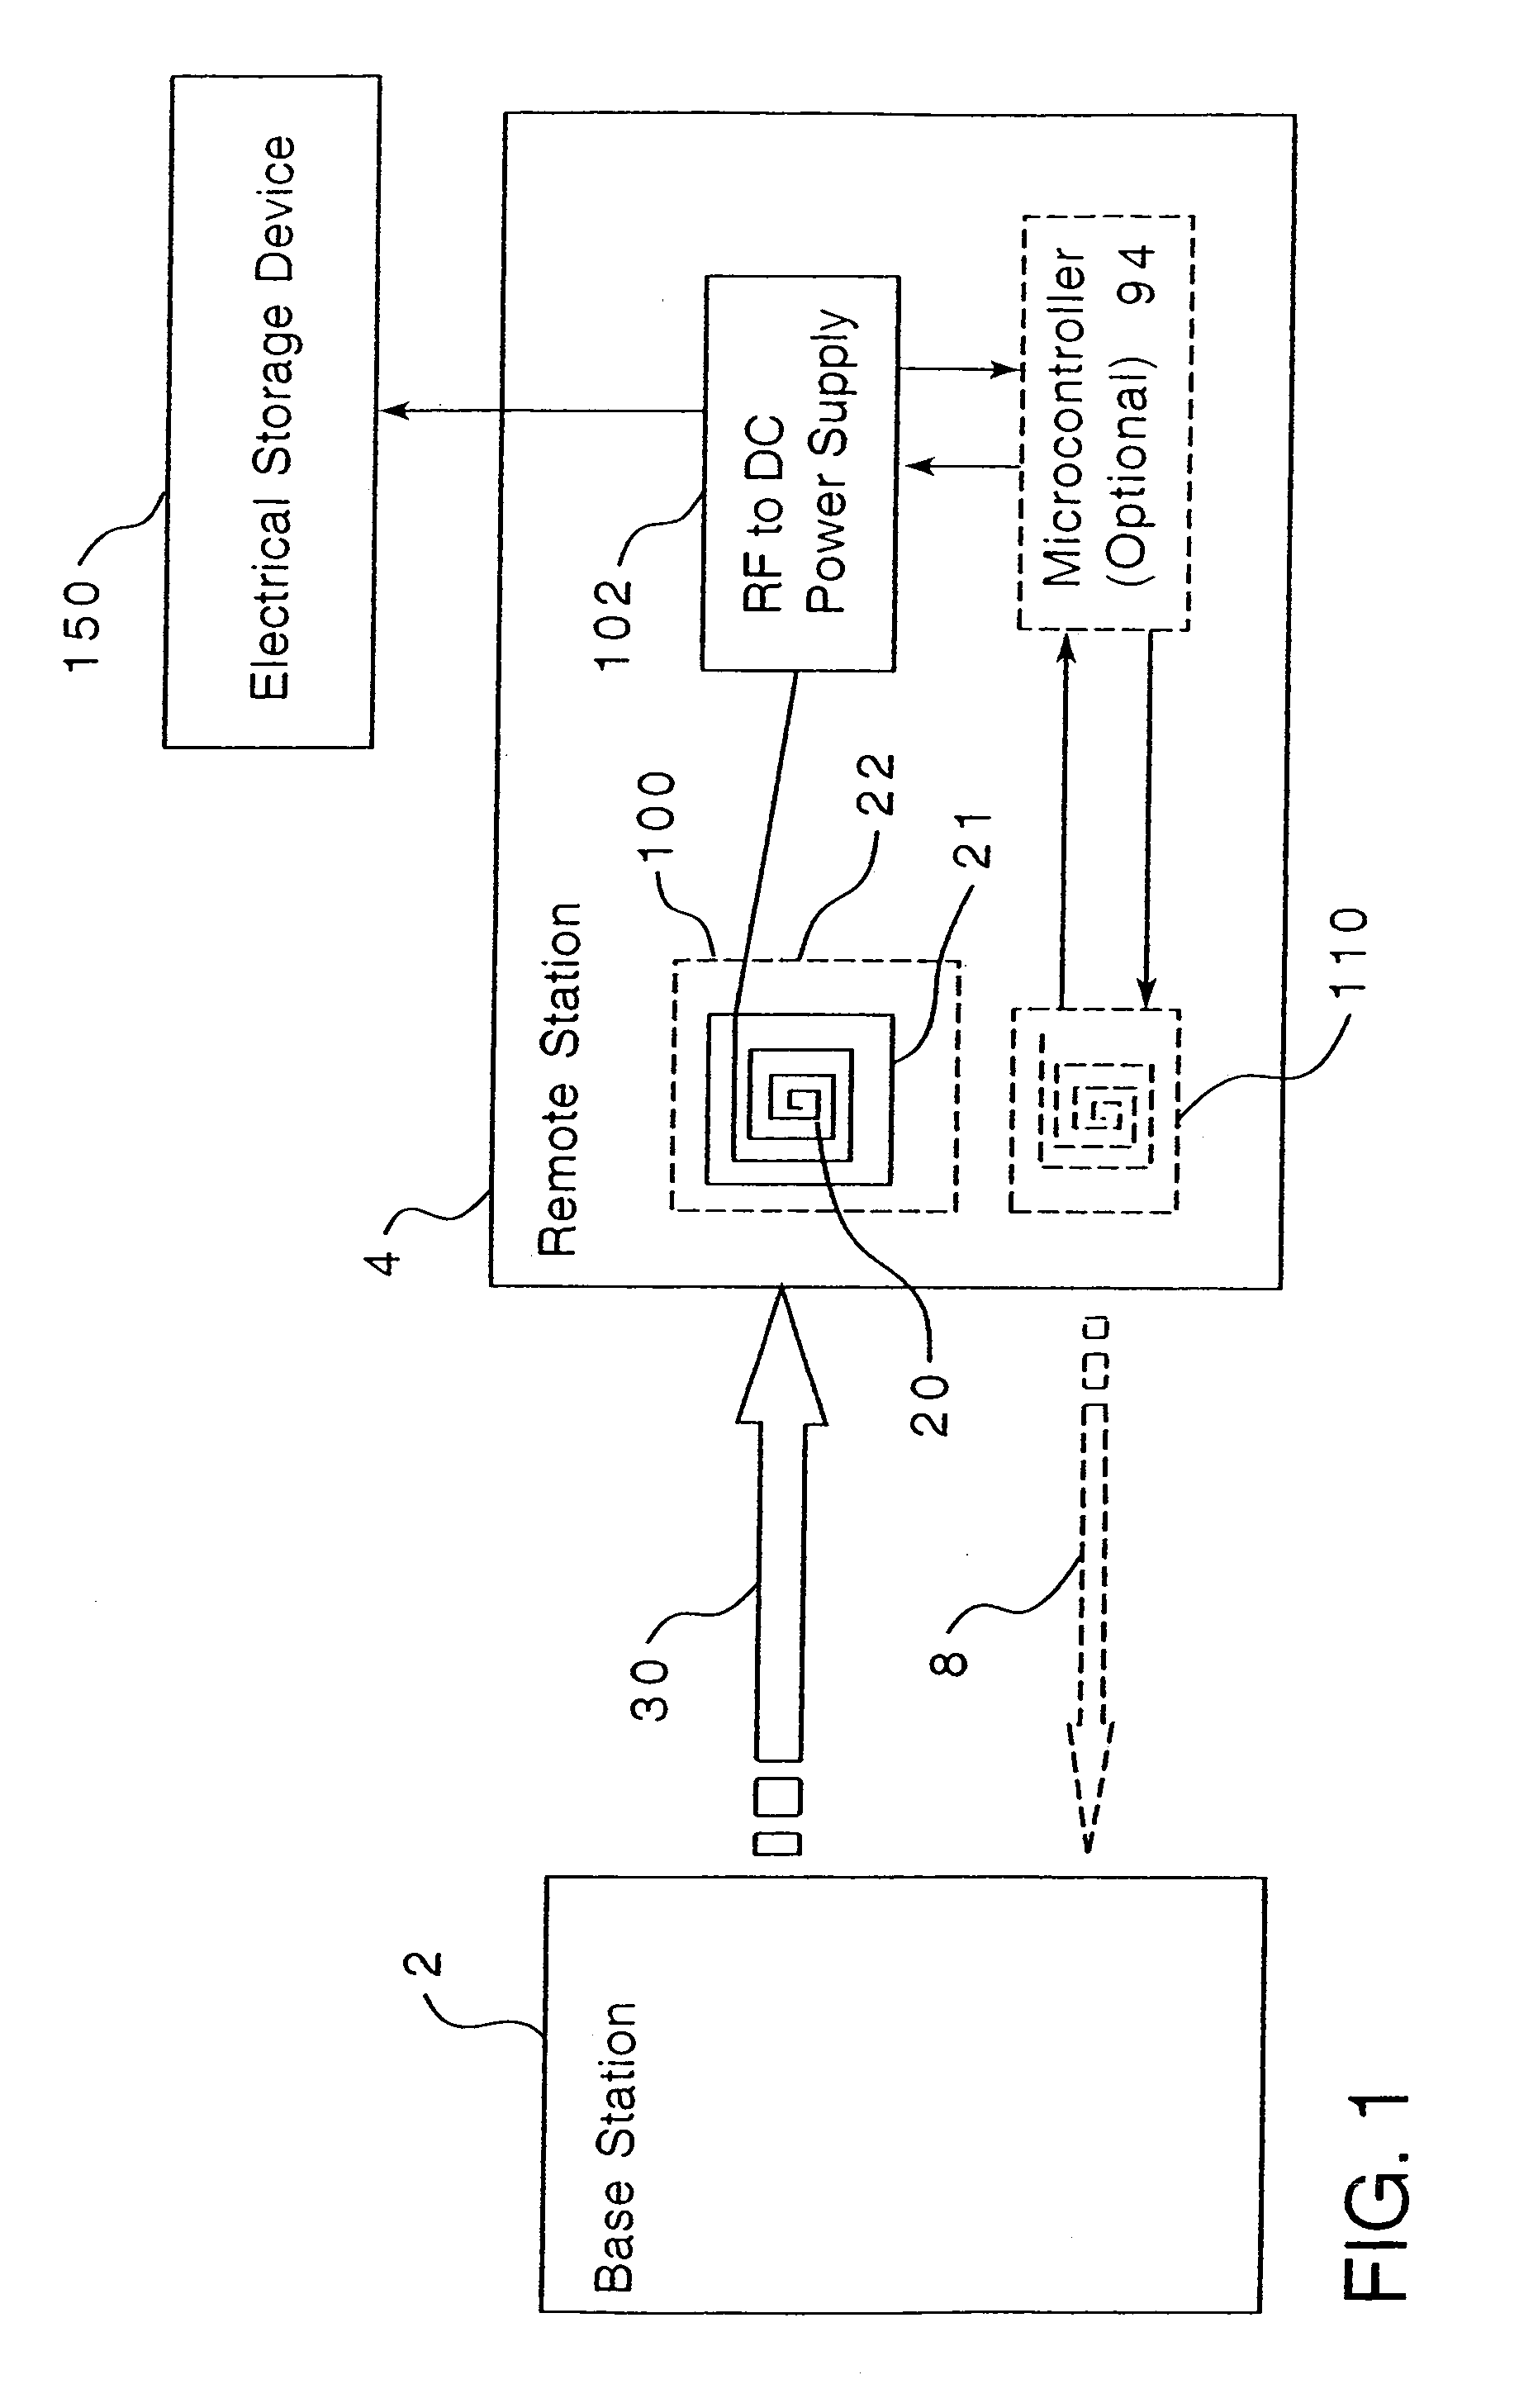 Recharging method and apparatus